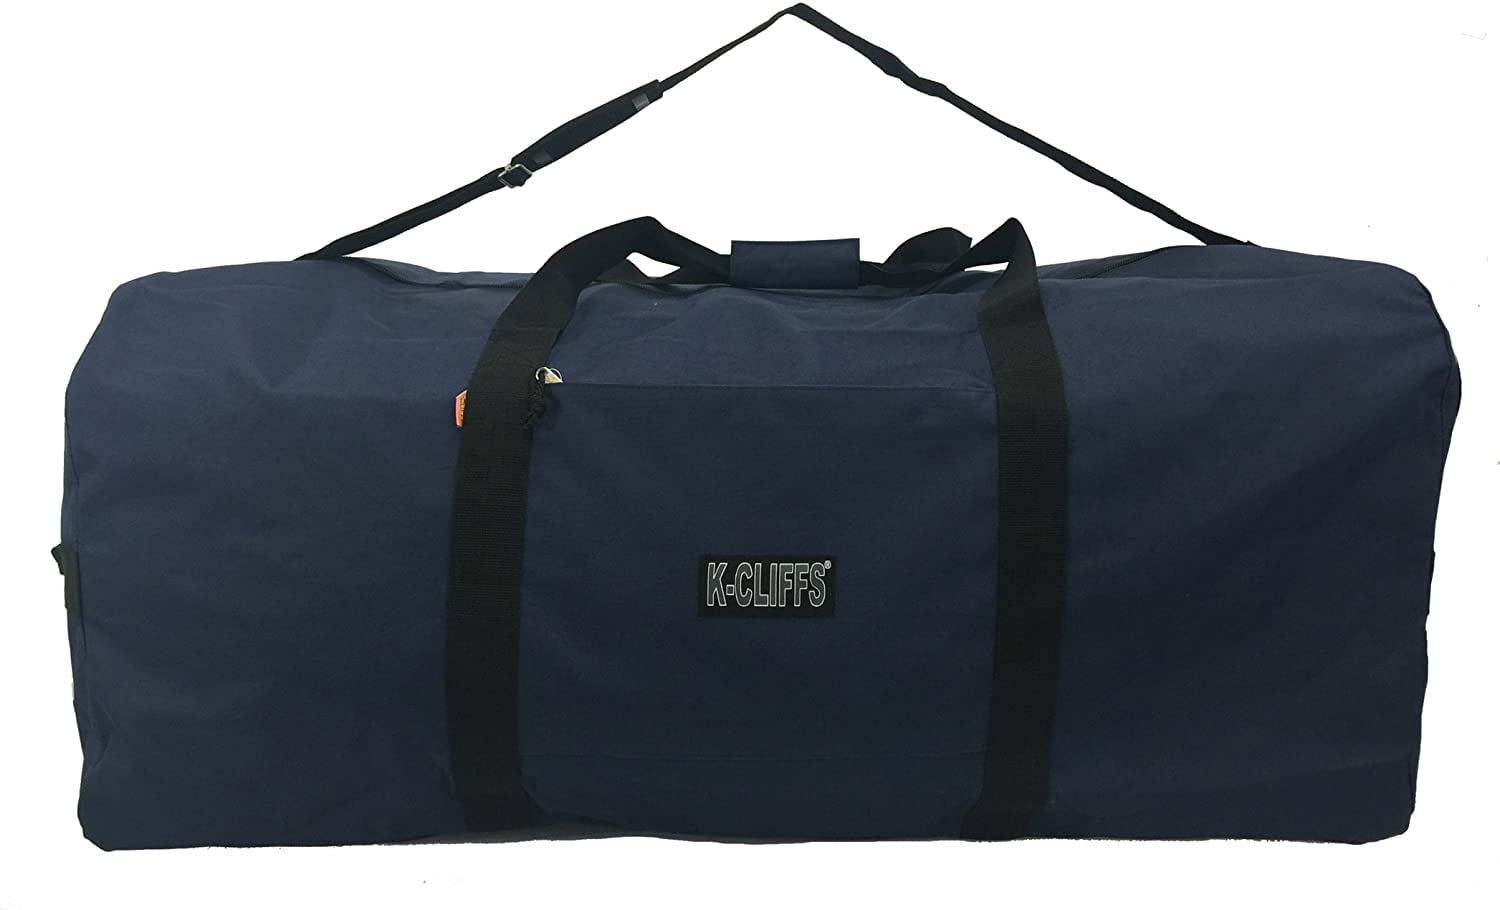 Heavy Duty Cargo Duffel Large 42 Inch Sport Gear Drum Set Equipment Hardware Travel Bag Rooftop Roofbag Rack Bag 42 Inch Black Traveling Bags 